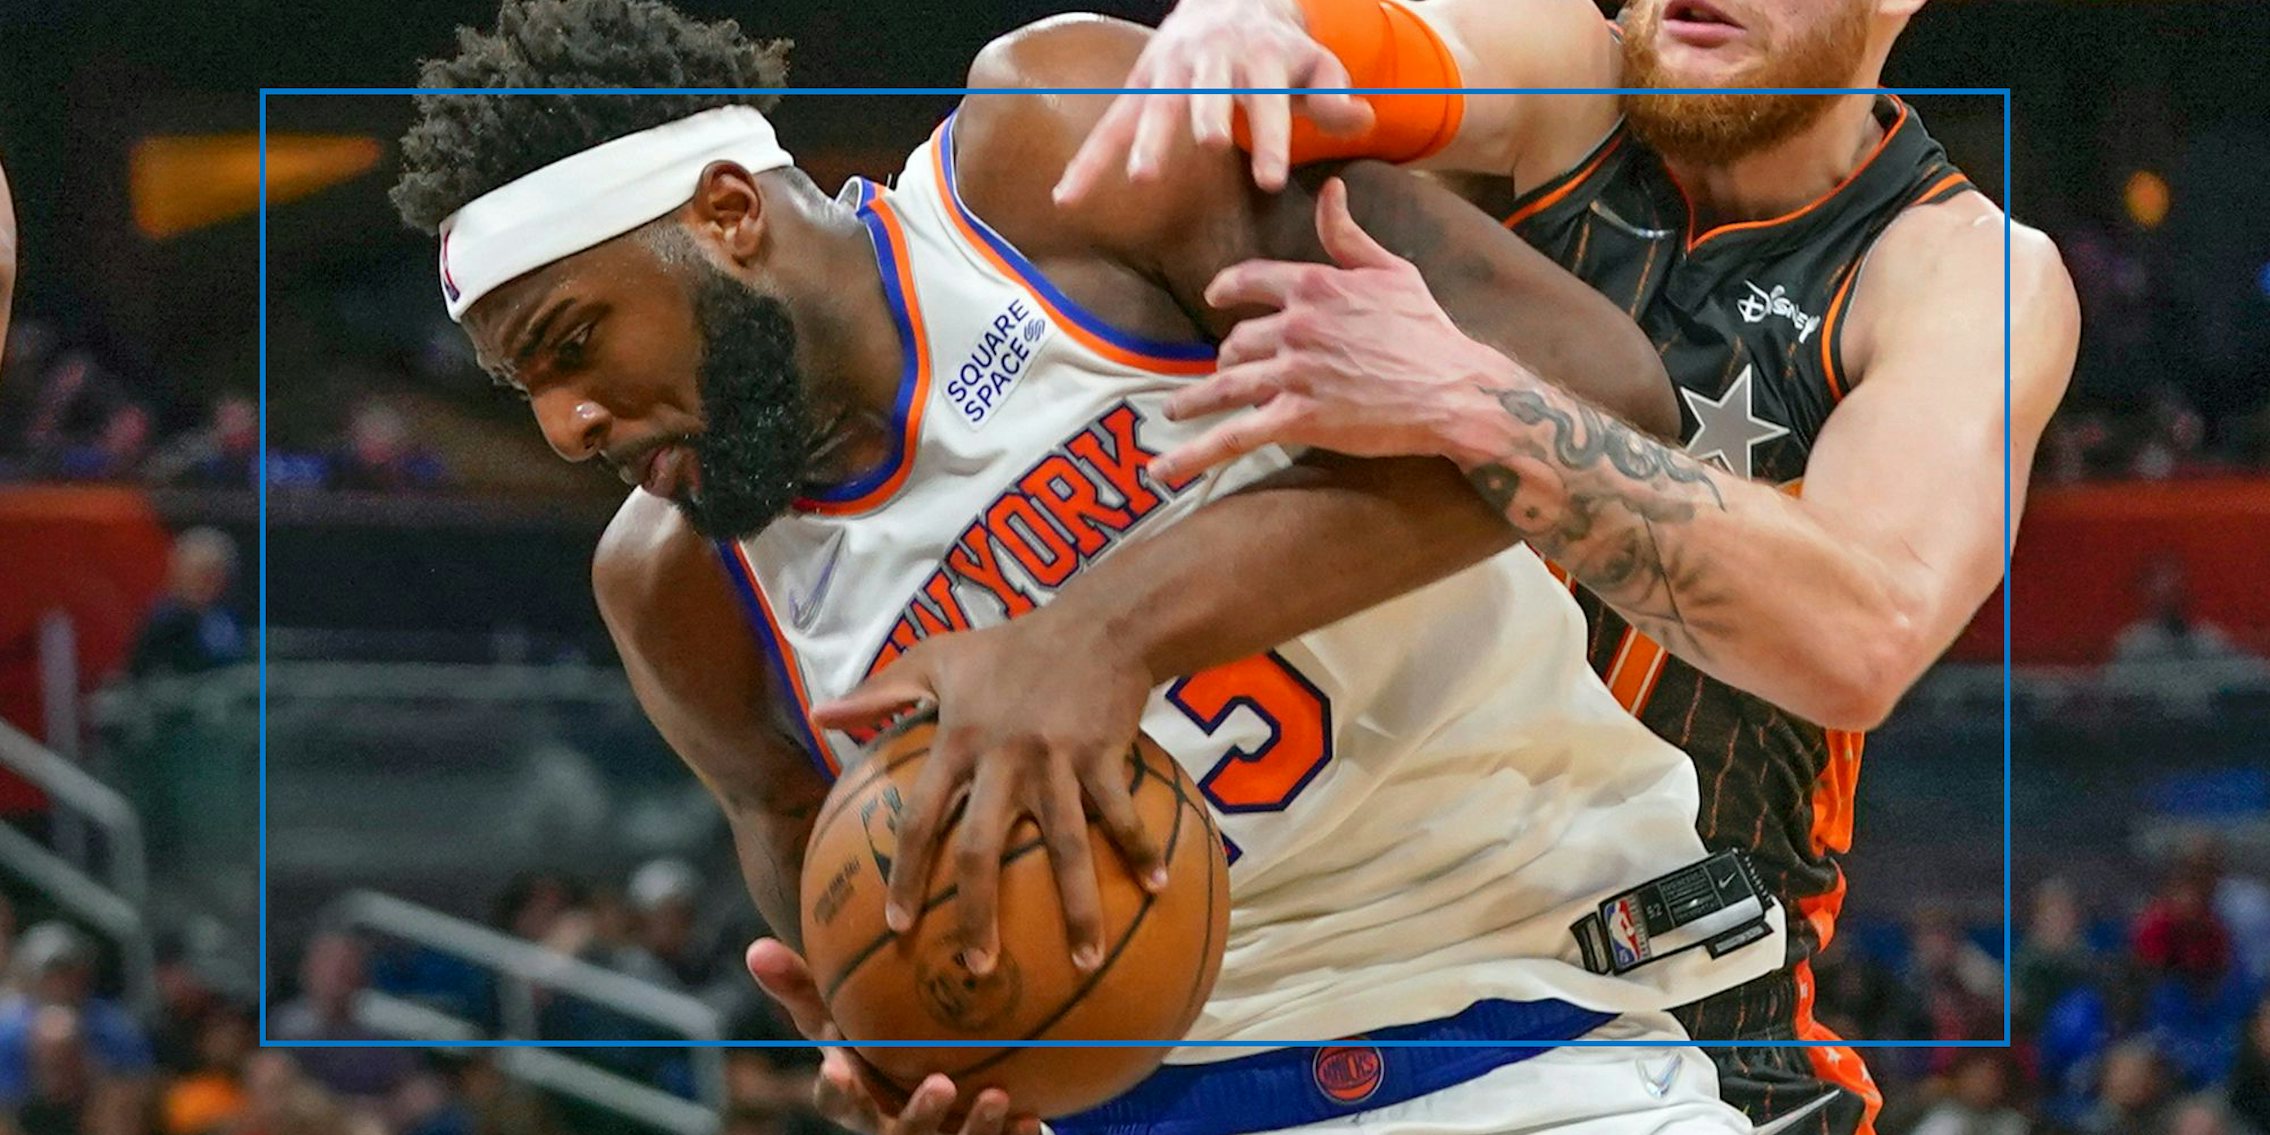 Knicks Away Jersey Concept : r/NYKnicks